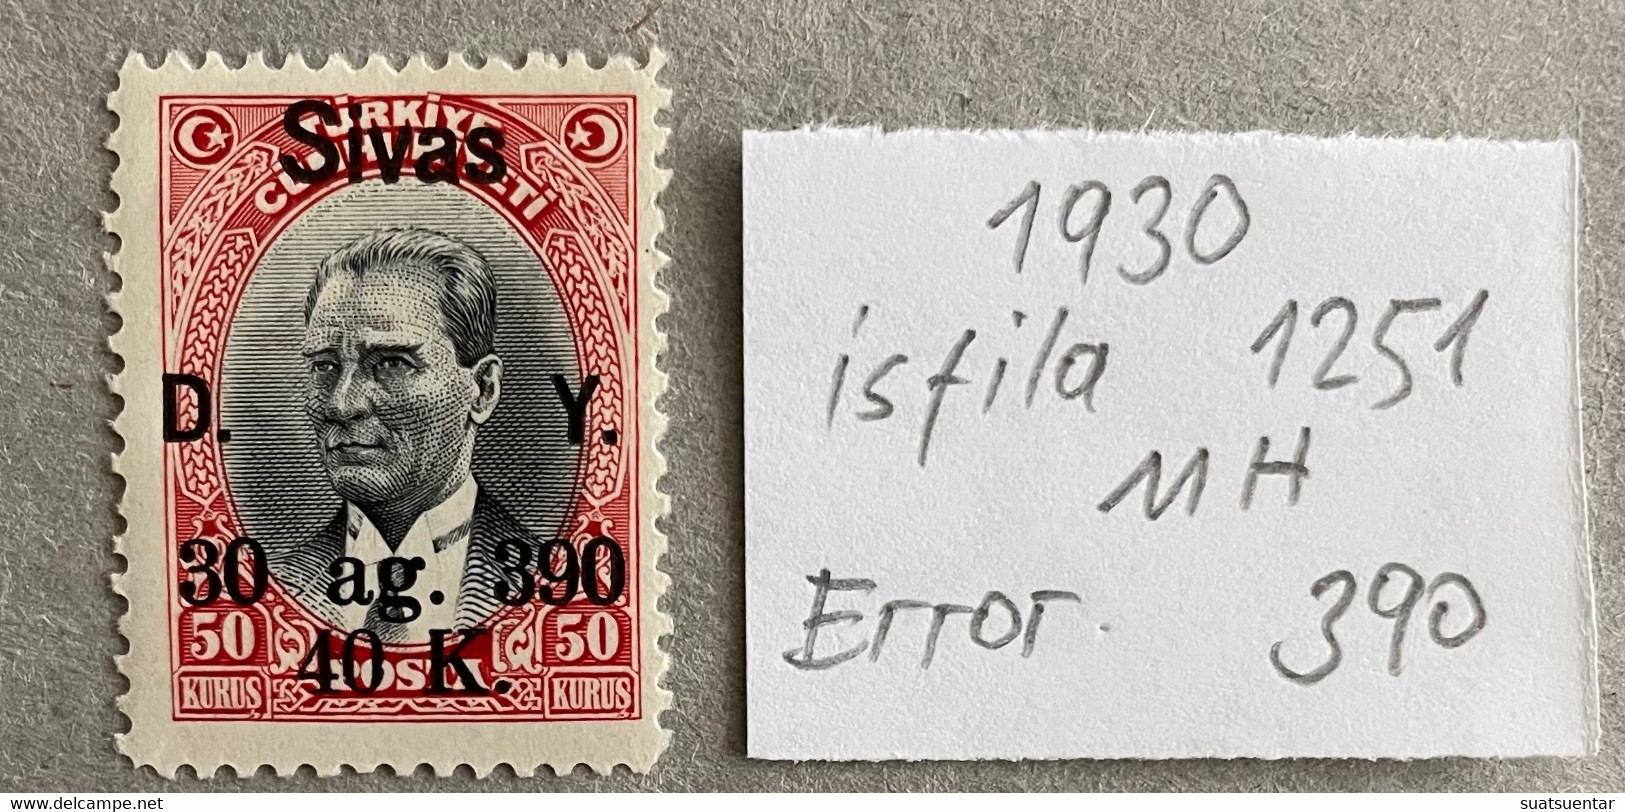 1930 Sivas-Ankara Railway Stamps Error   390 MH Isfila 1251 - Unused Stamps